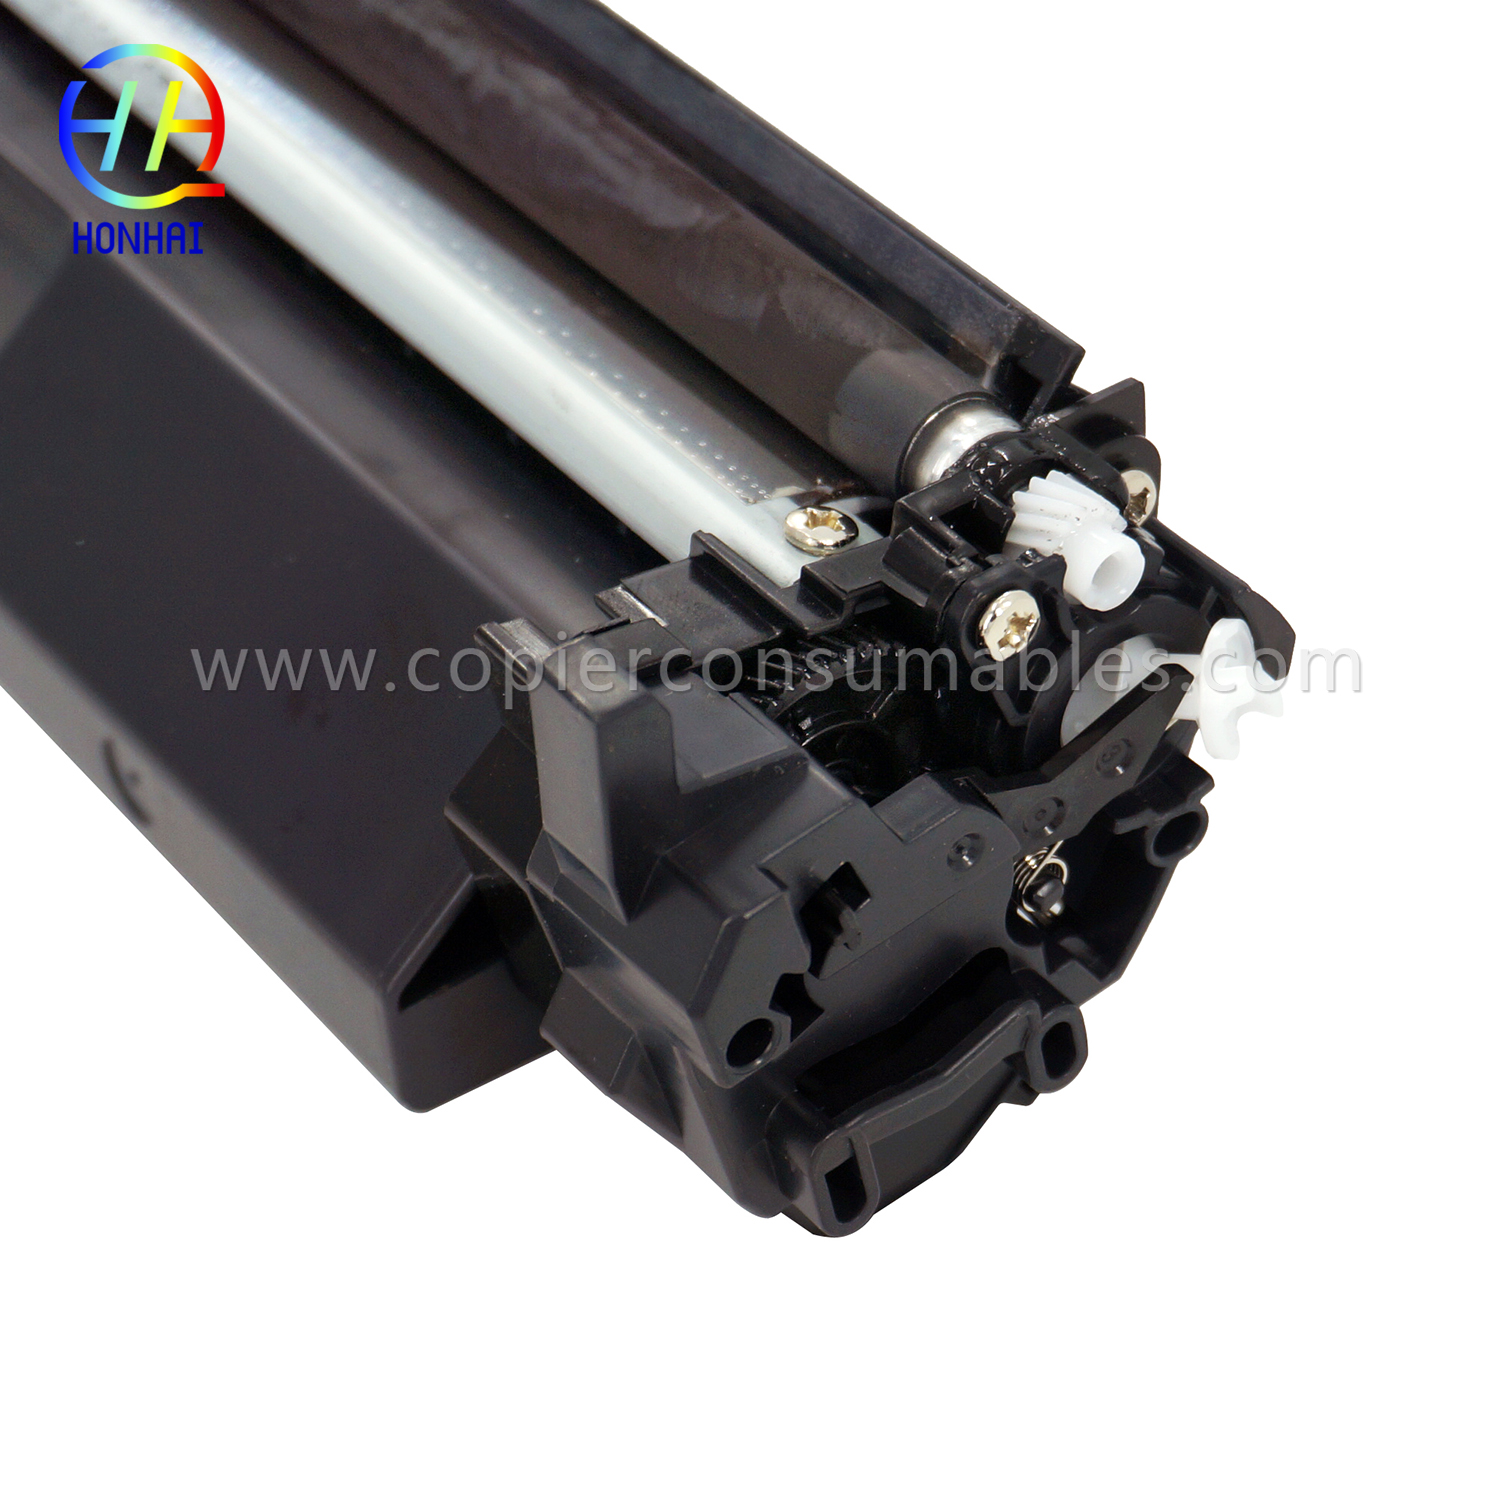 Cartucho de tóner HP LaserJet Pro M203d M203dn M203dw MFP M227fdn M227fdw M227sdn (CF230A) (13) 拷贝